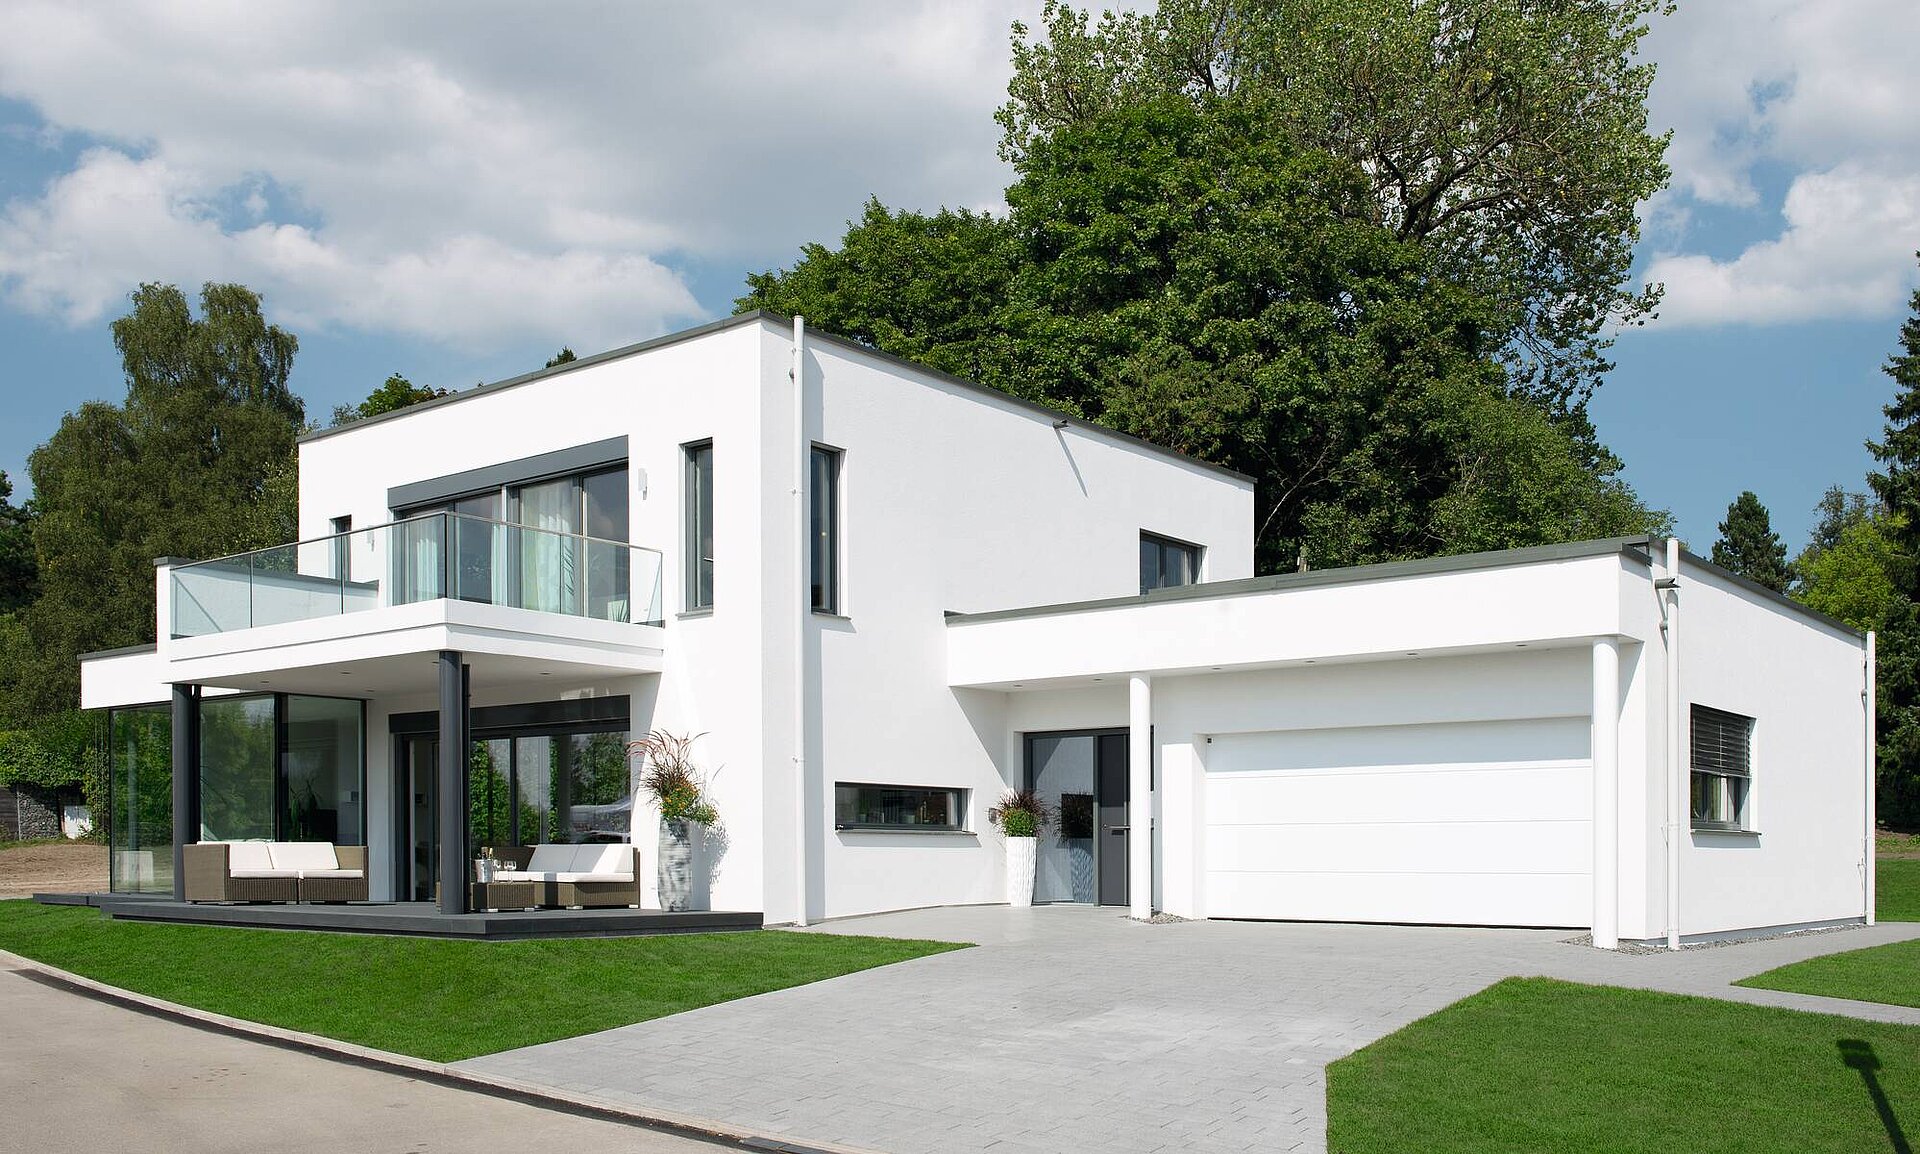 Contemporary, eco-friendly prefabricated house